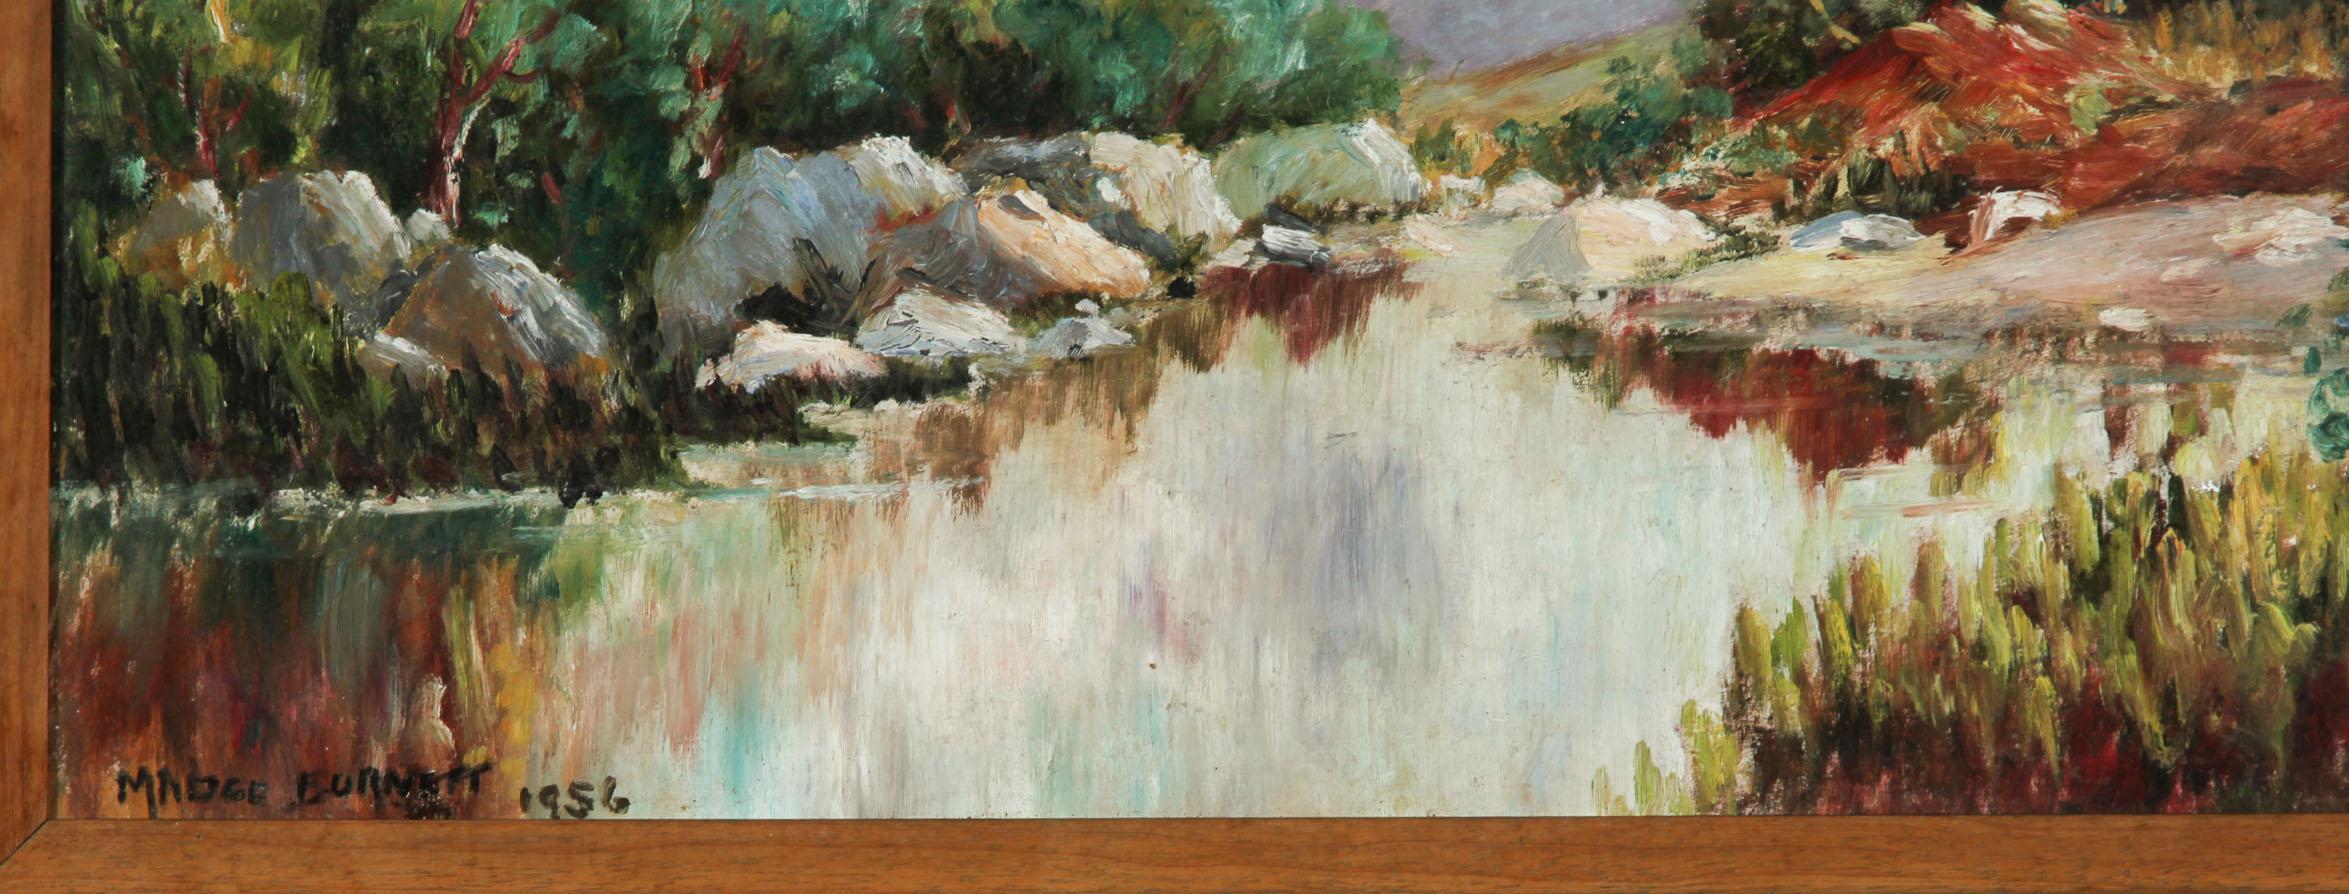 Madge Burnett - Signed and Framed 1952 Oil, South African Landscape 2